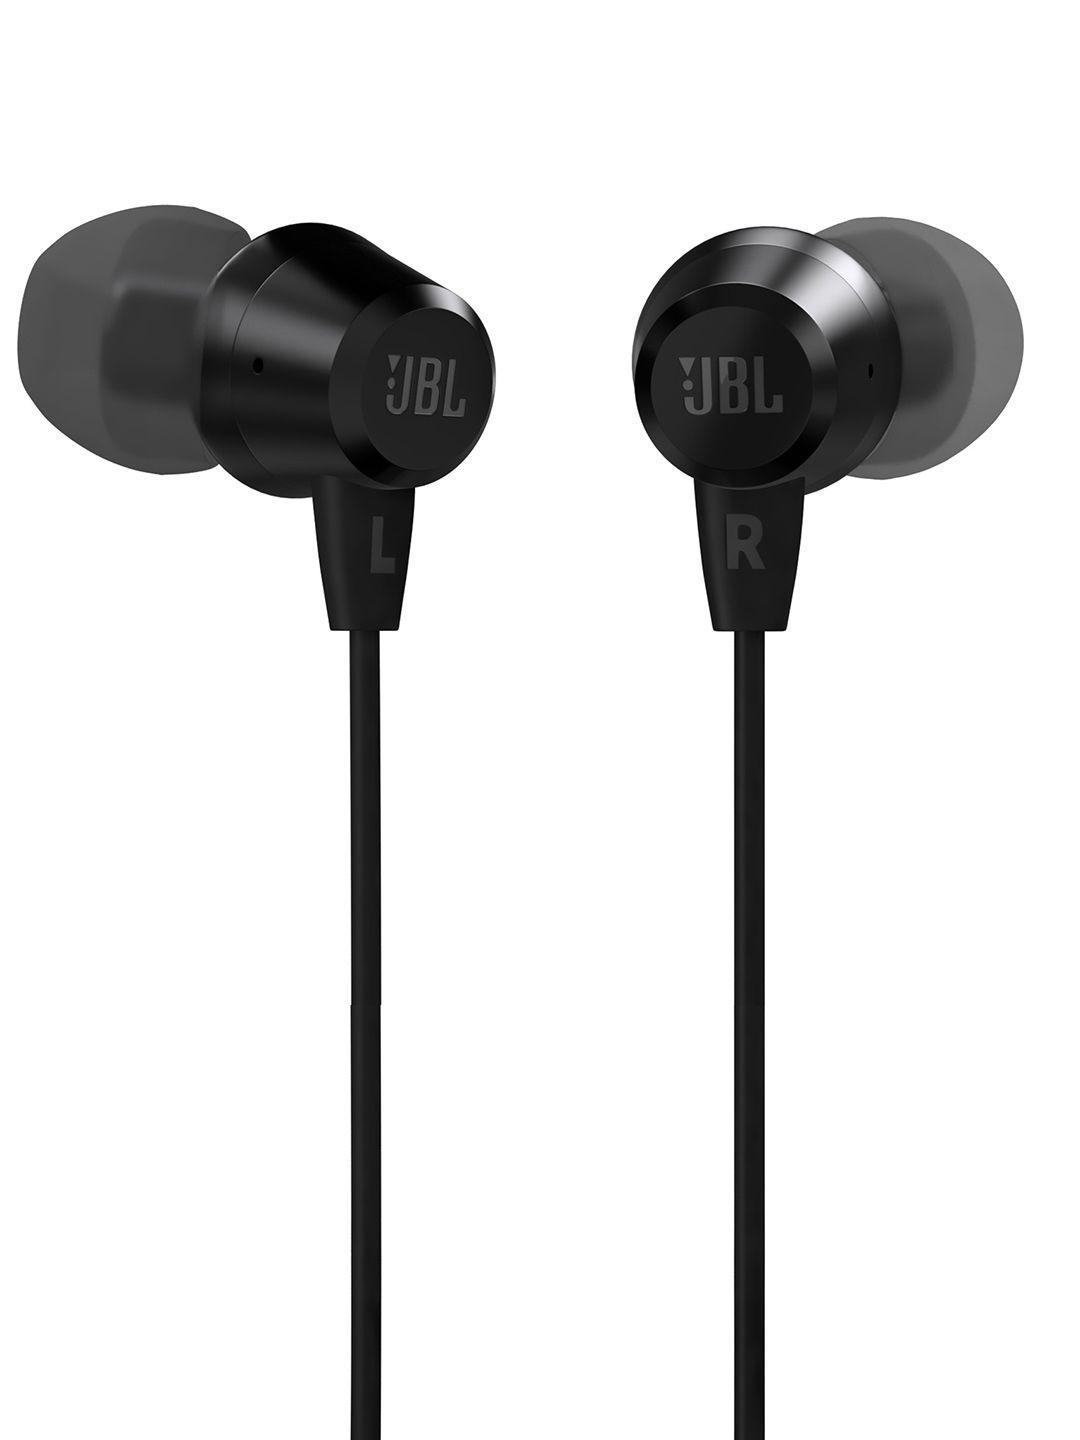 jbl-black-c50hi-m-in-ear-headphones-with-mic-jblc50hiblk